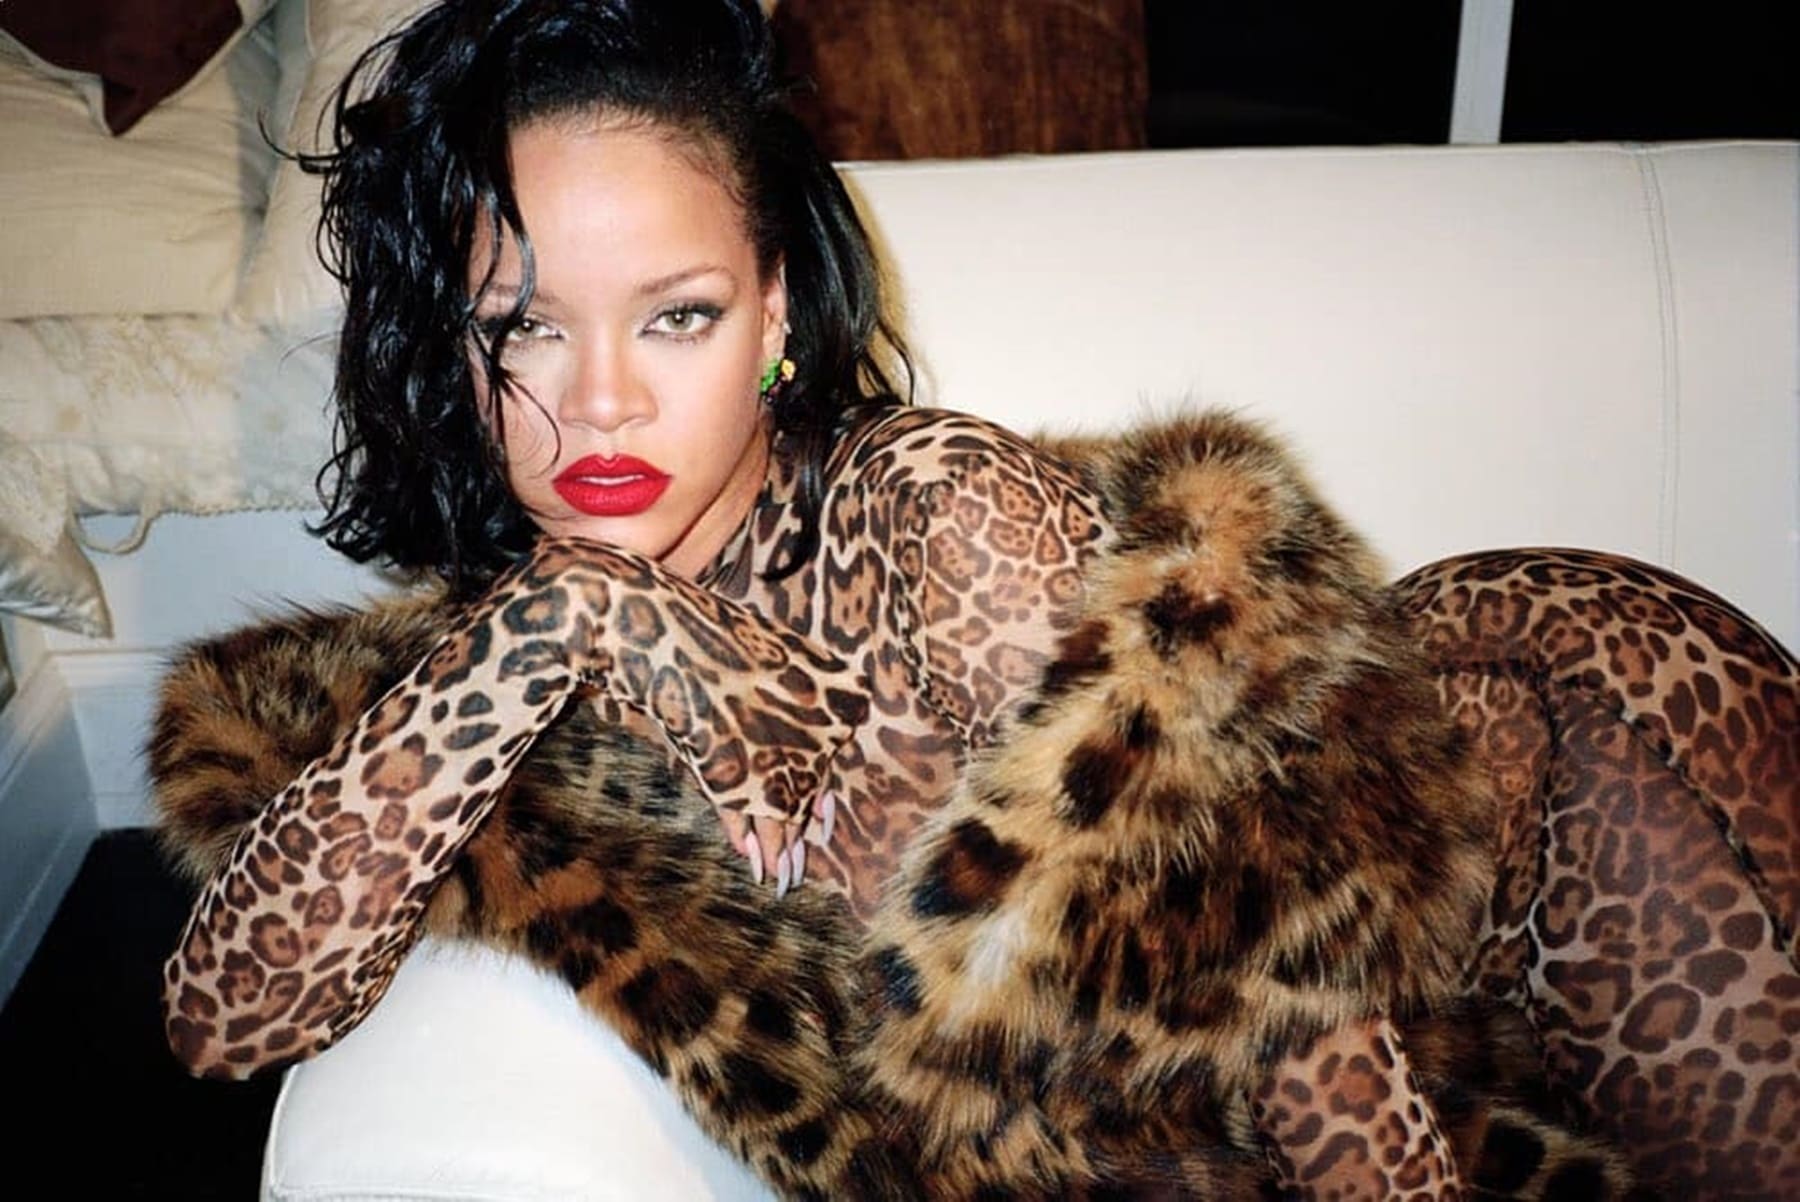 Rihanna Dons Risqu Sheer Leopard Catsuit In New Photo Critics Make Inappropriate Plastic